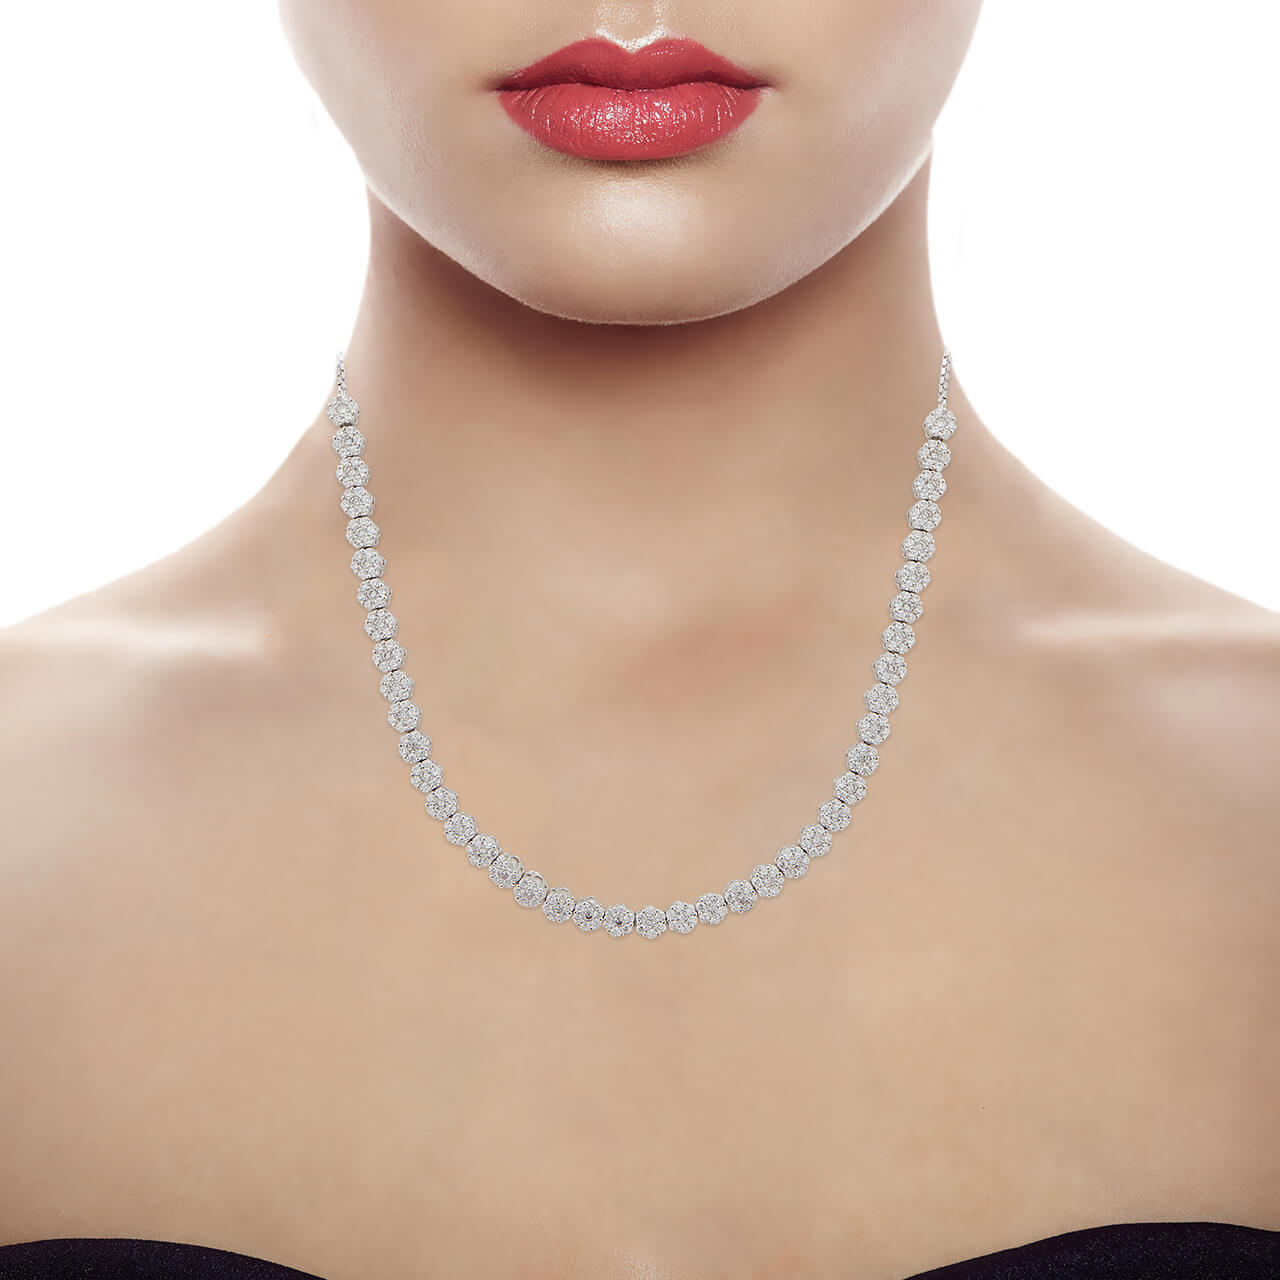 Elegant Diamond Necklace Set In Silver